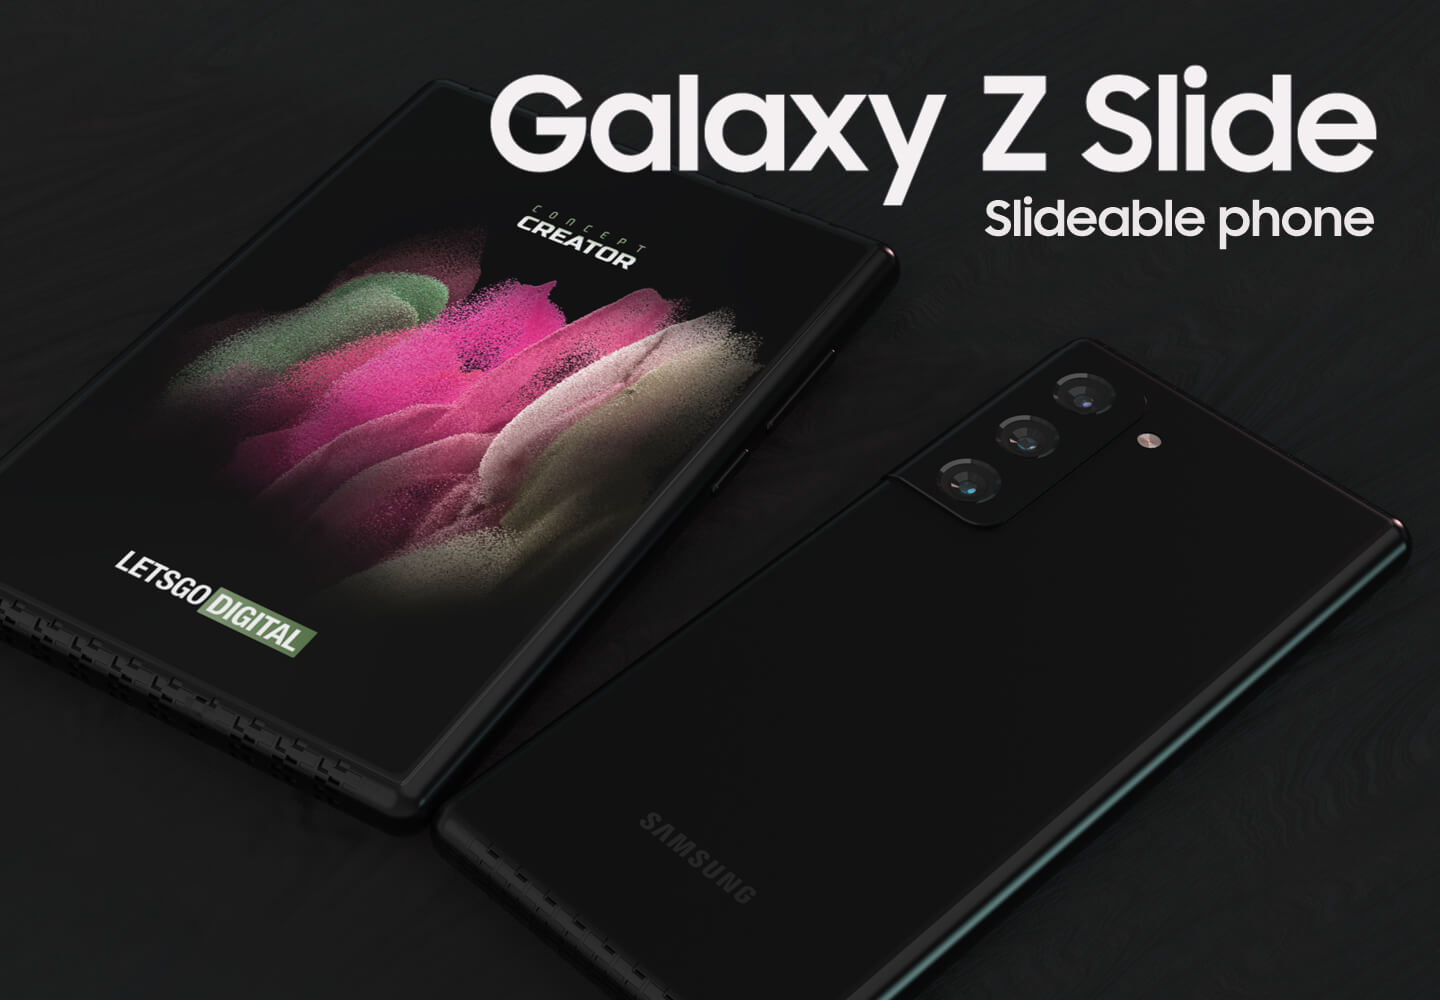 Samsung Galaxy Z Slide slideable smartphone